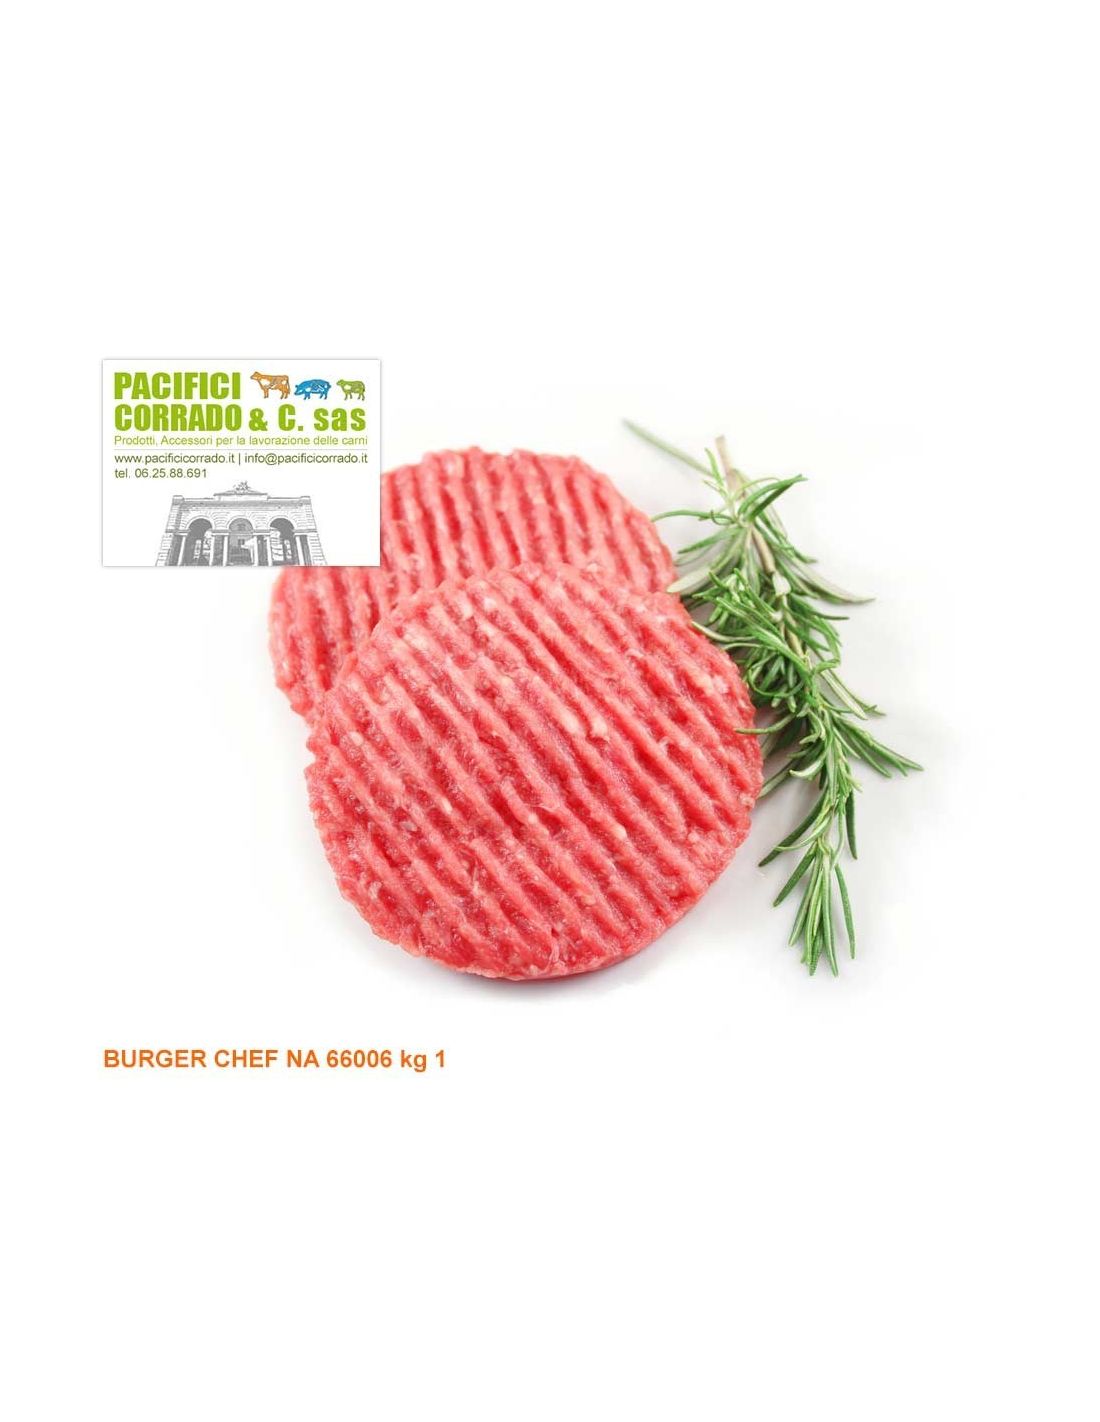 Premix Burger chef 66006 kg 1 senza allergeni